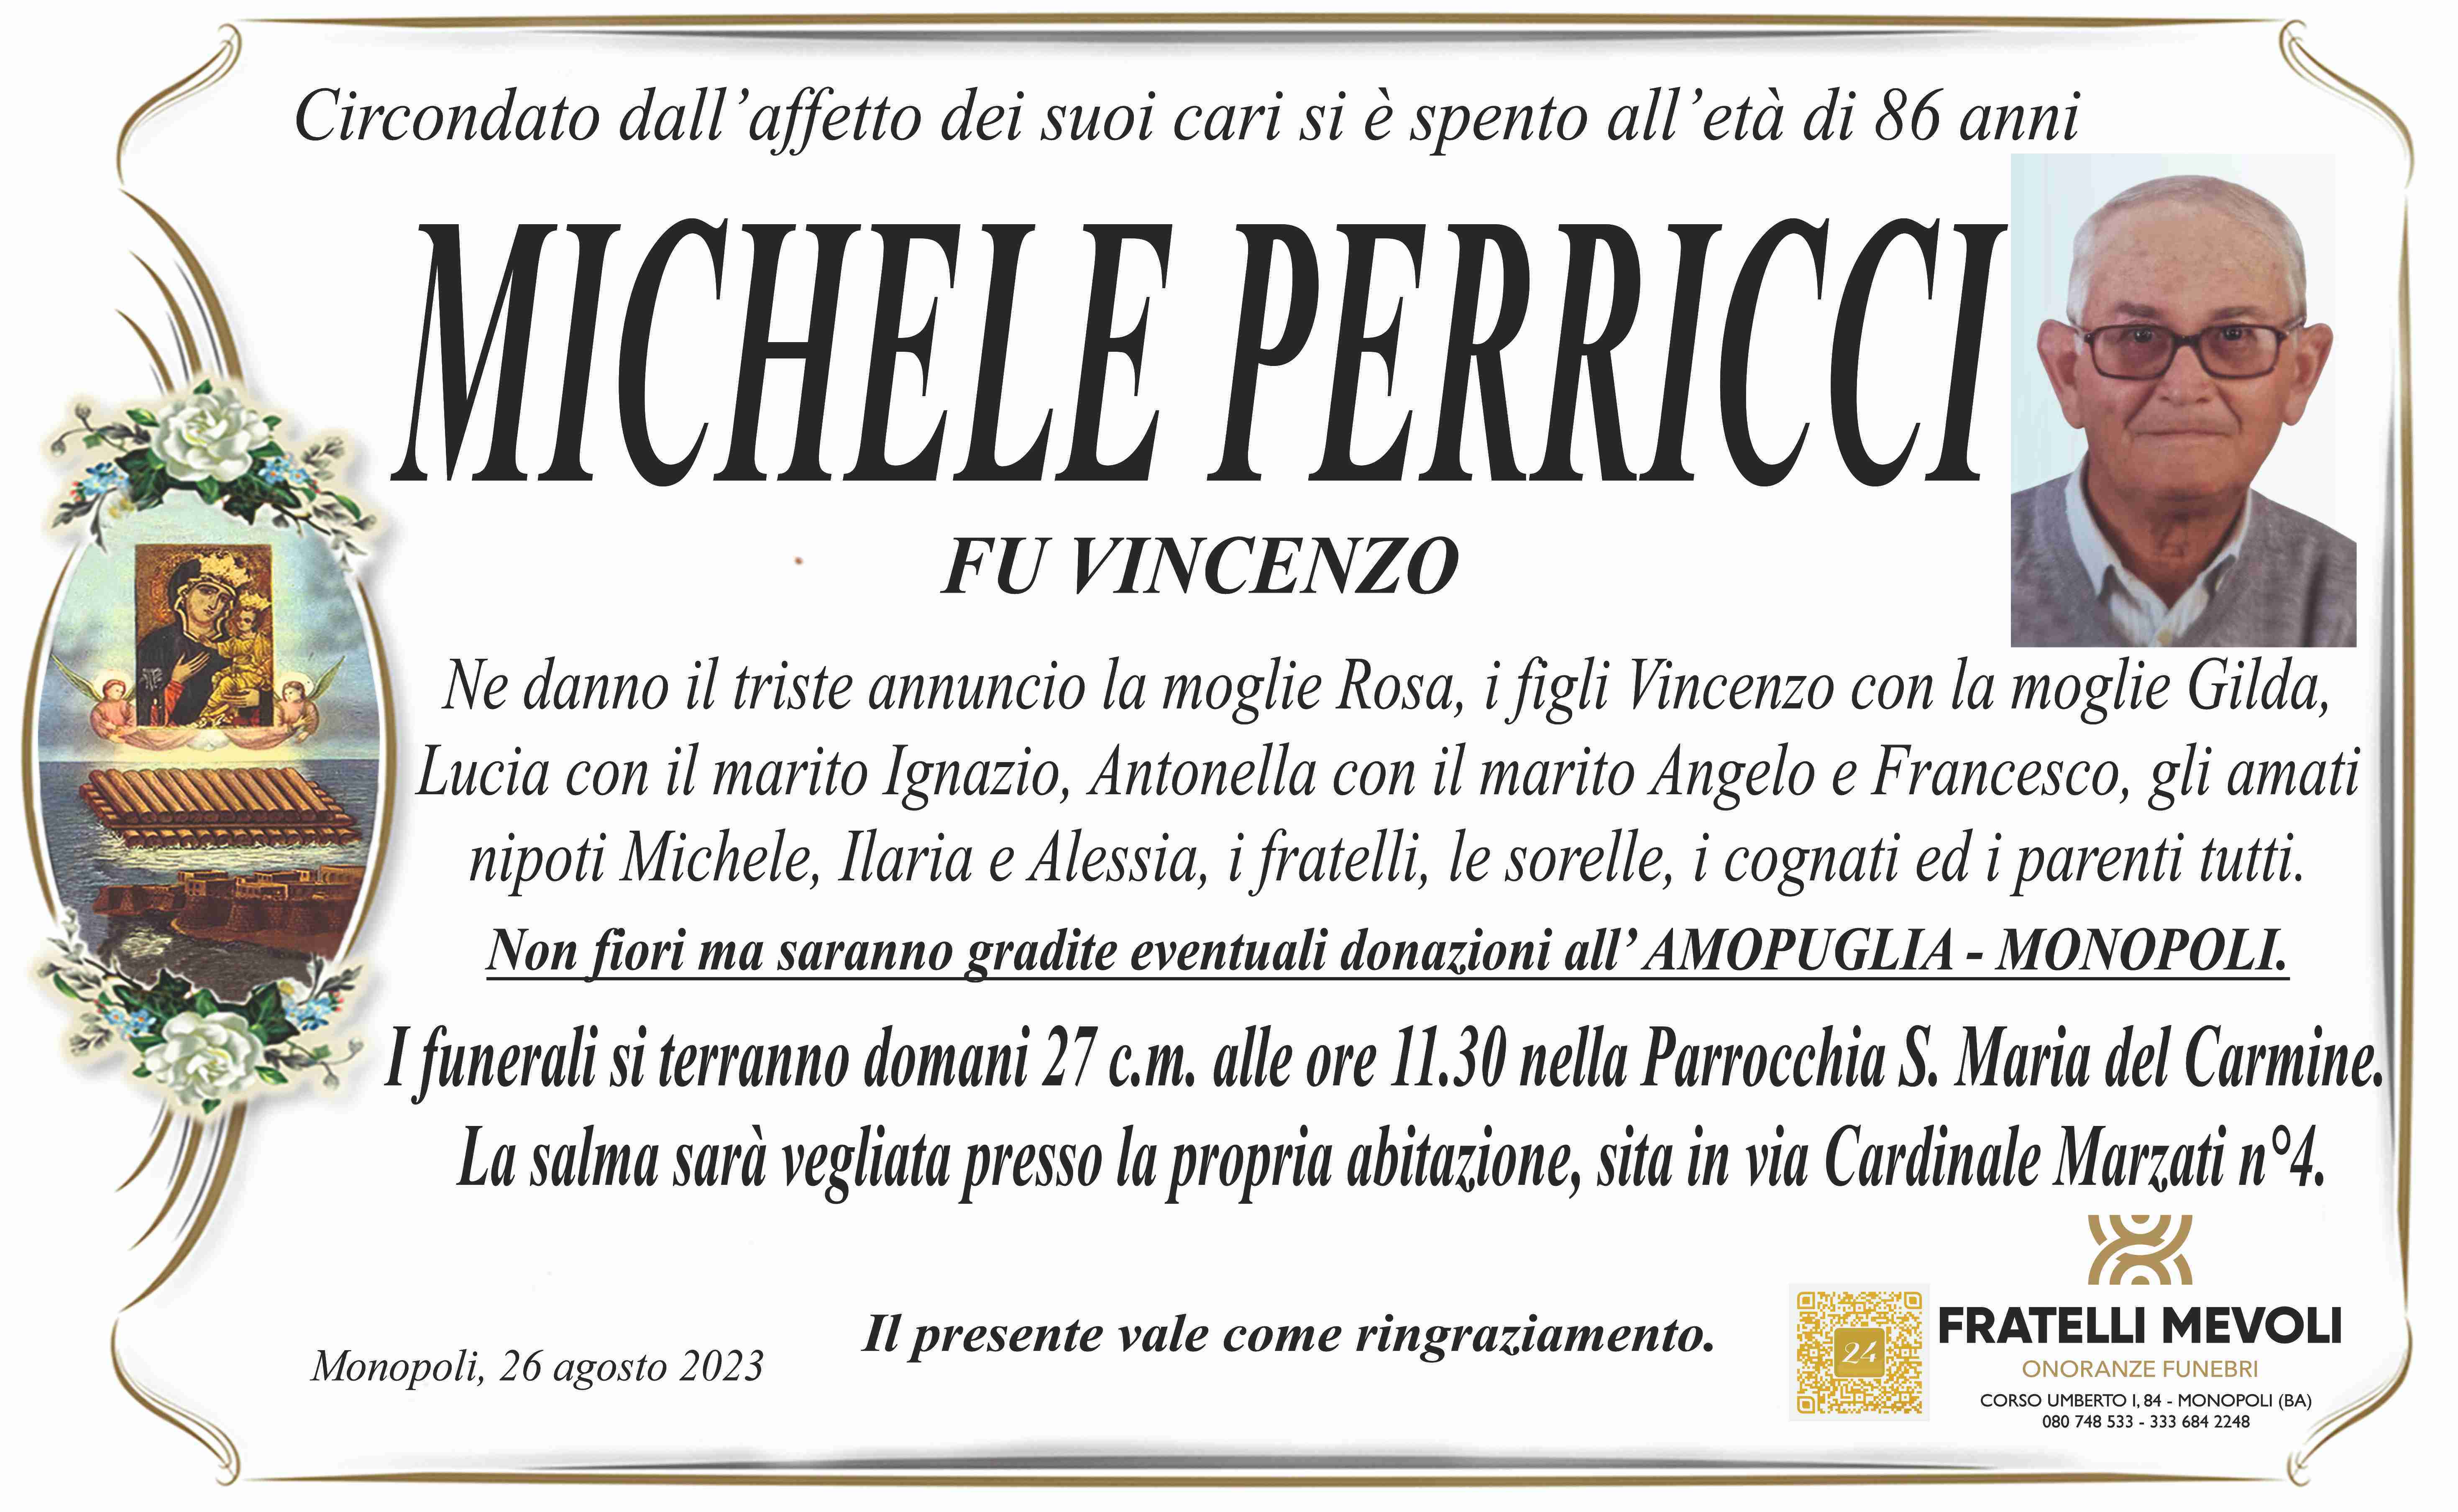 Michele Perricci